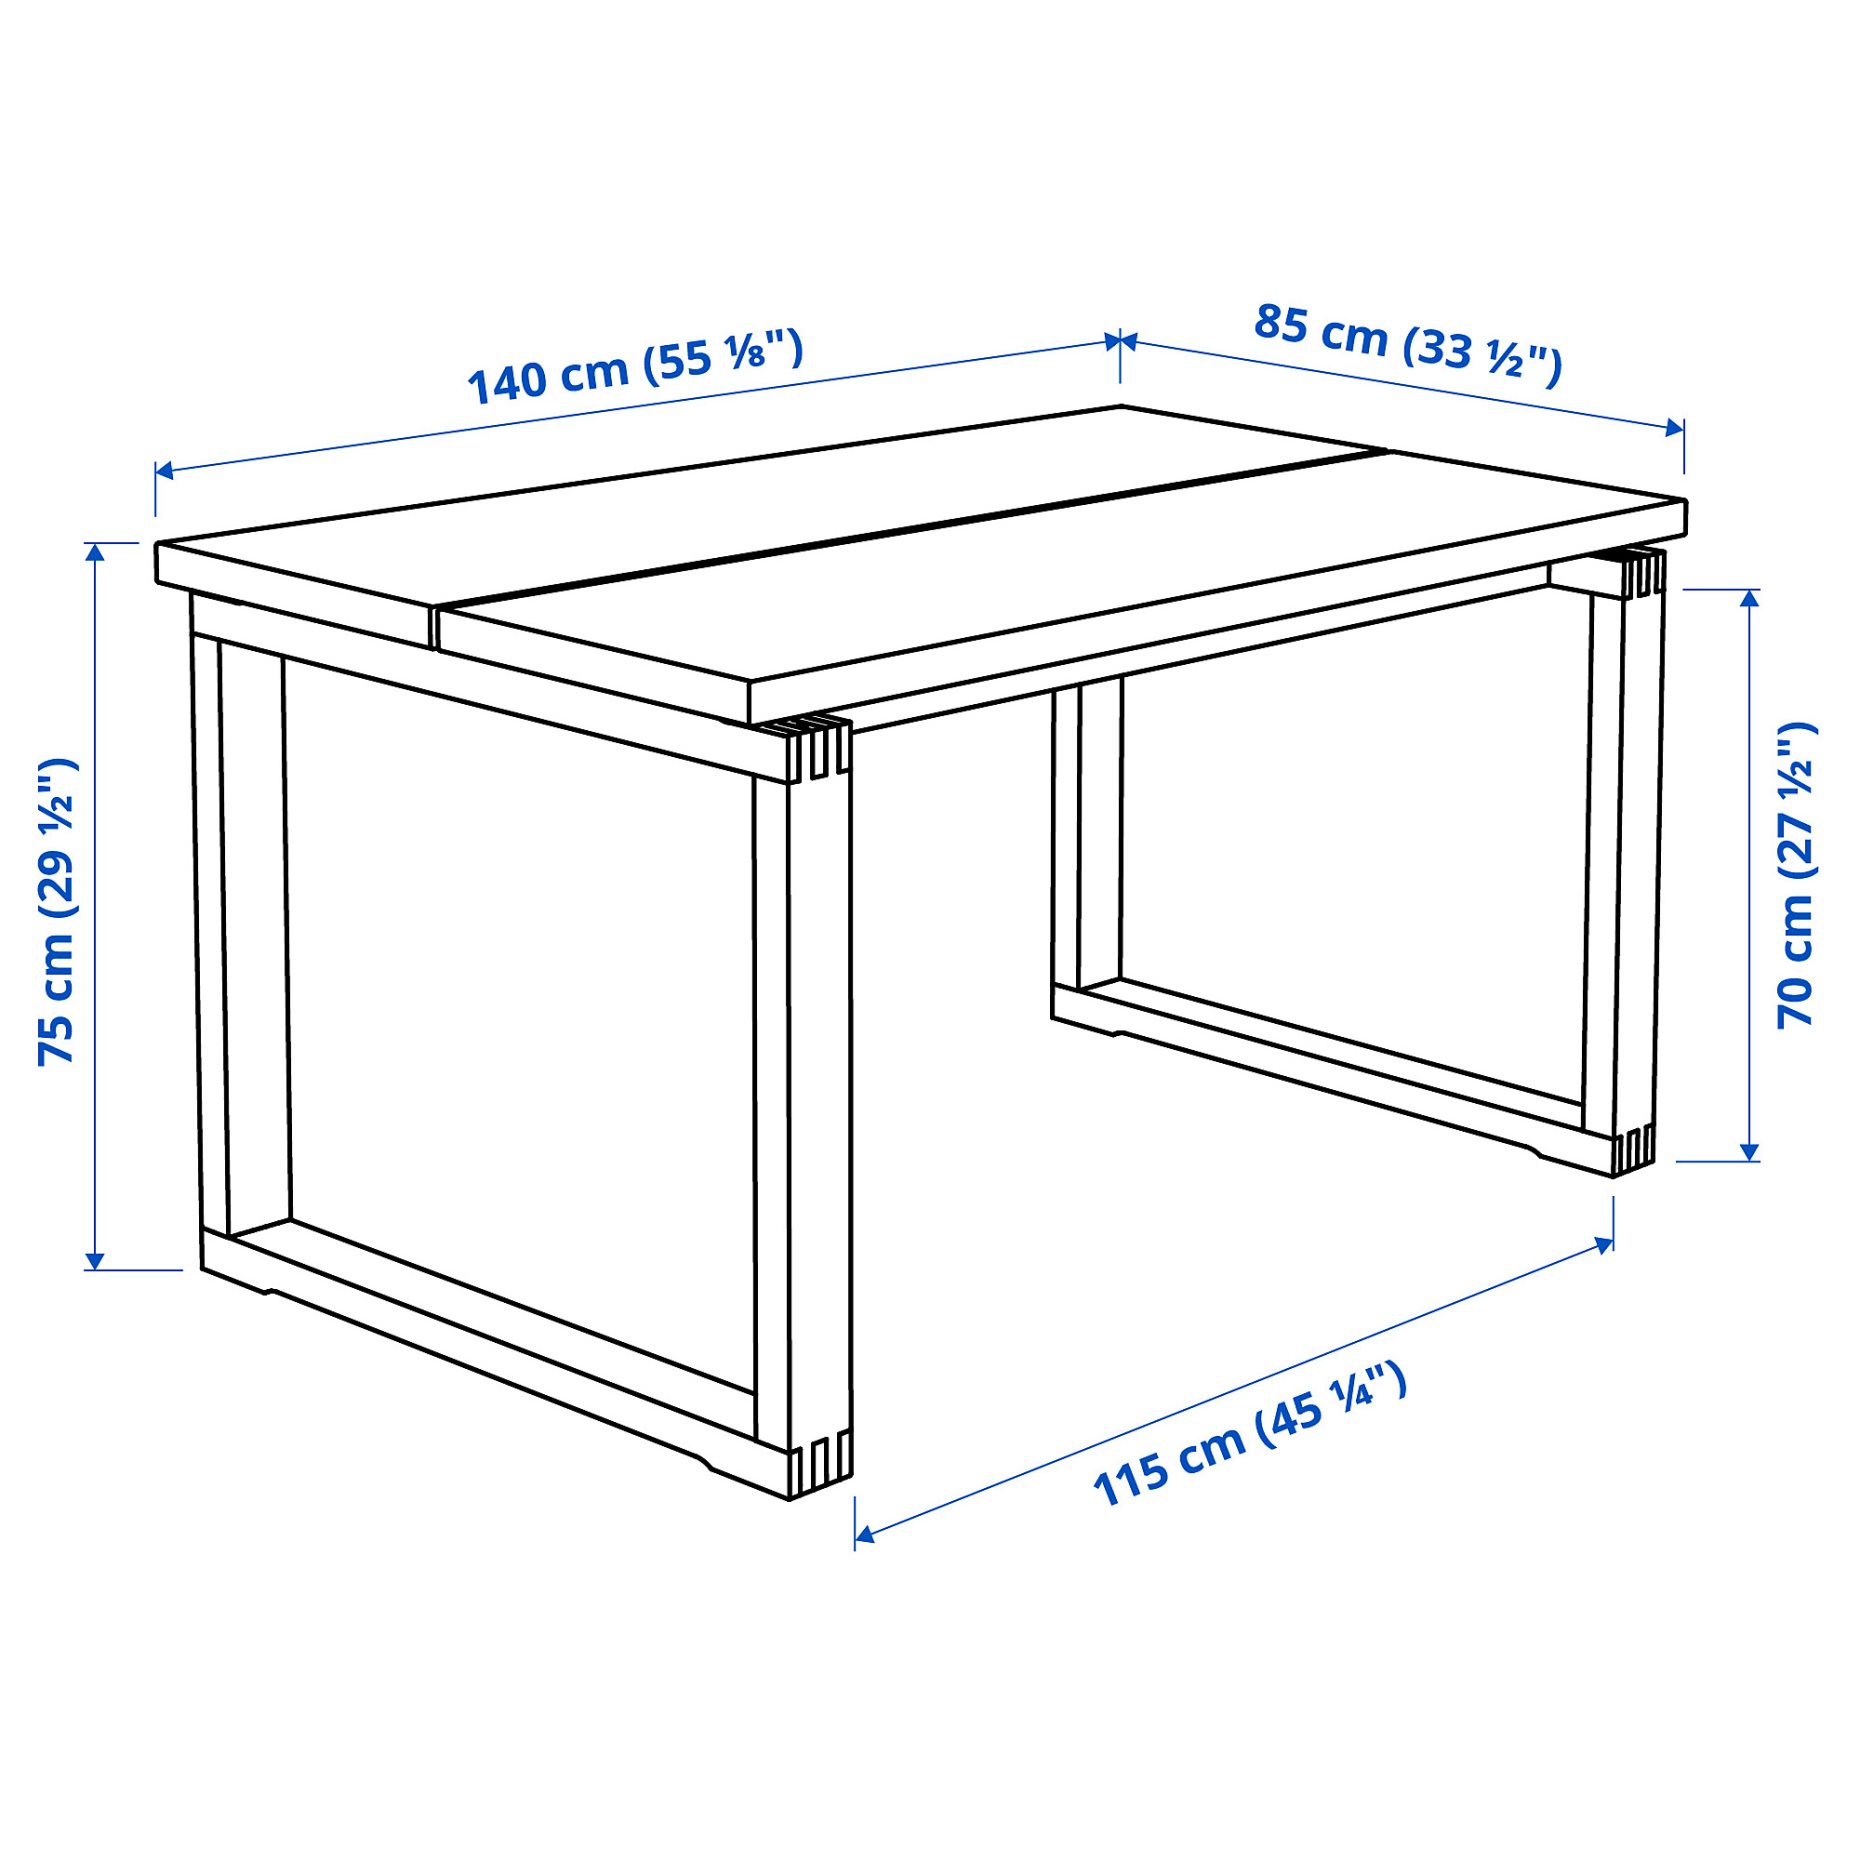 MORBYLANGA/LUSTEBO, τραπέζι και 4 καρέκλες, 140x85 cm, 695.235.20